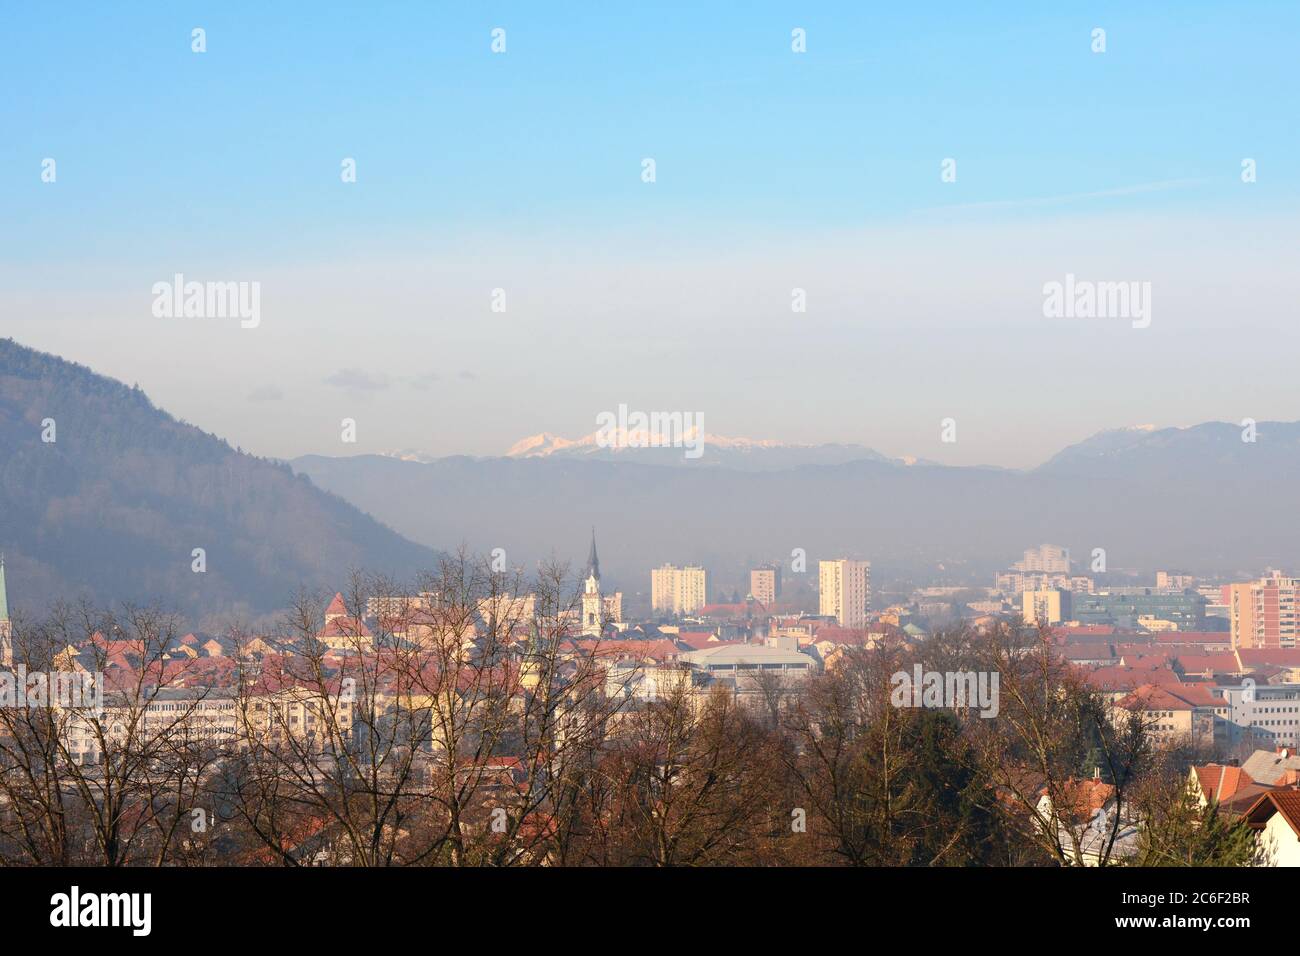 CELJE, Slovenia - January 04, 2020: Celje Stock Photo